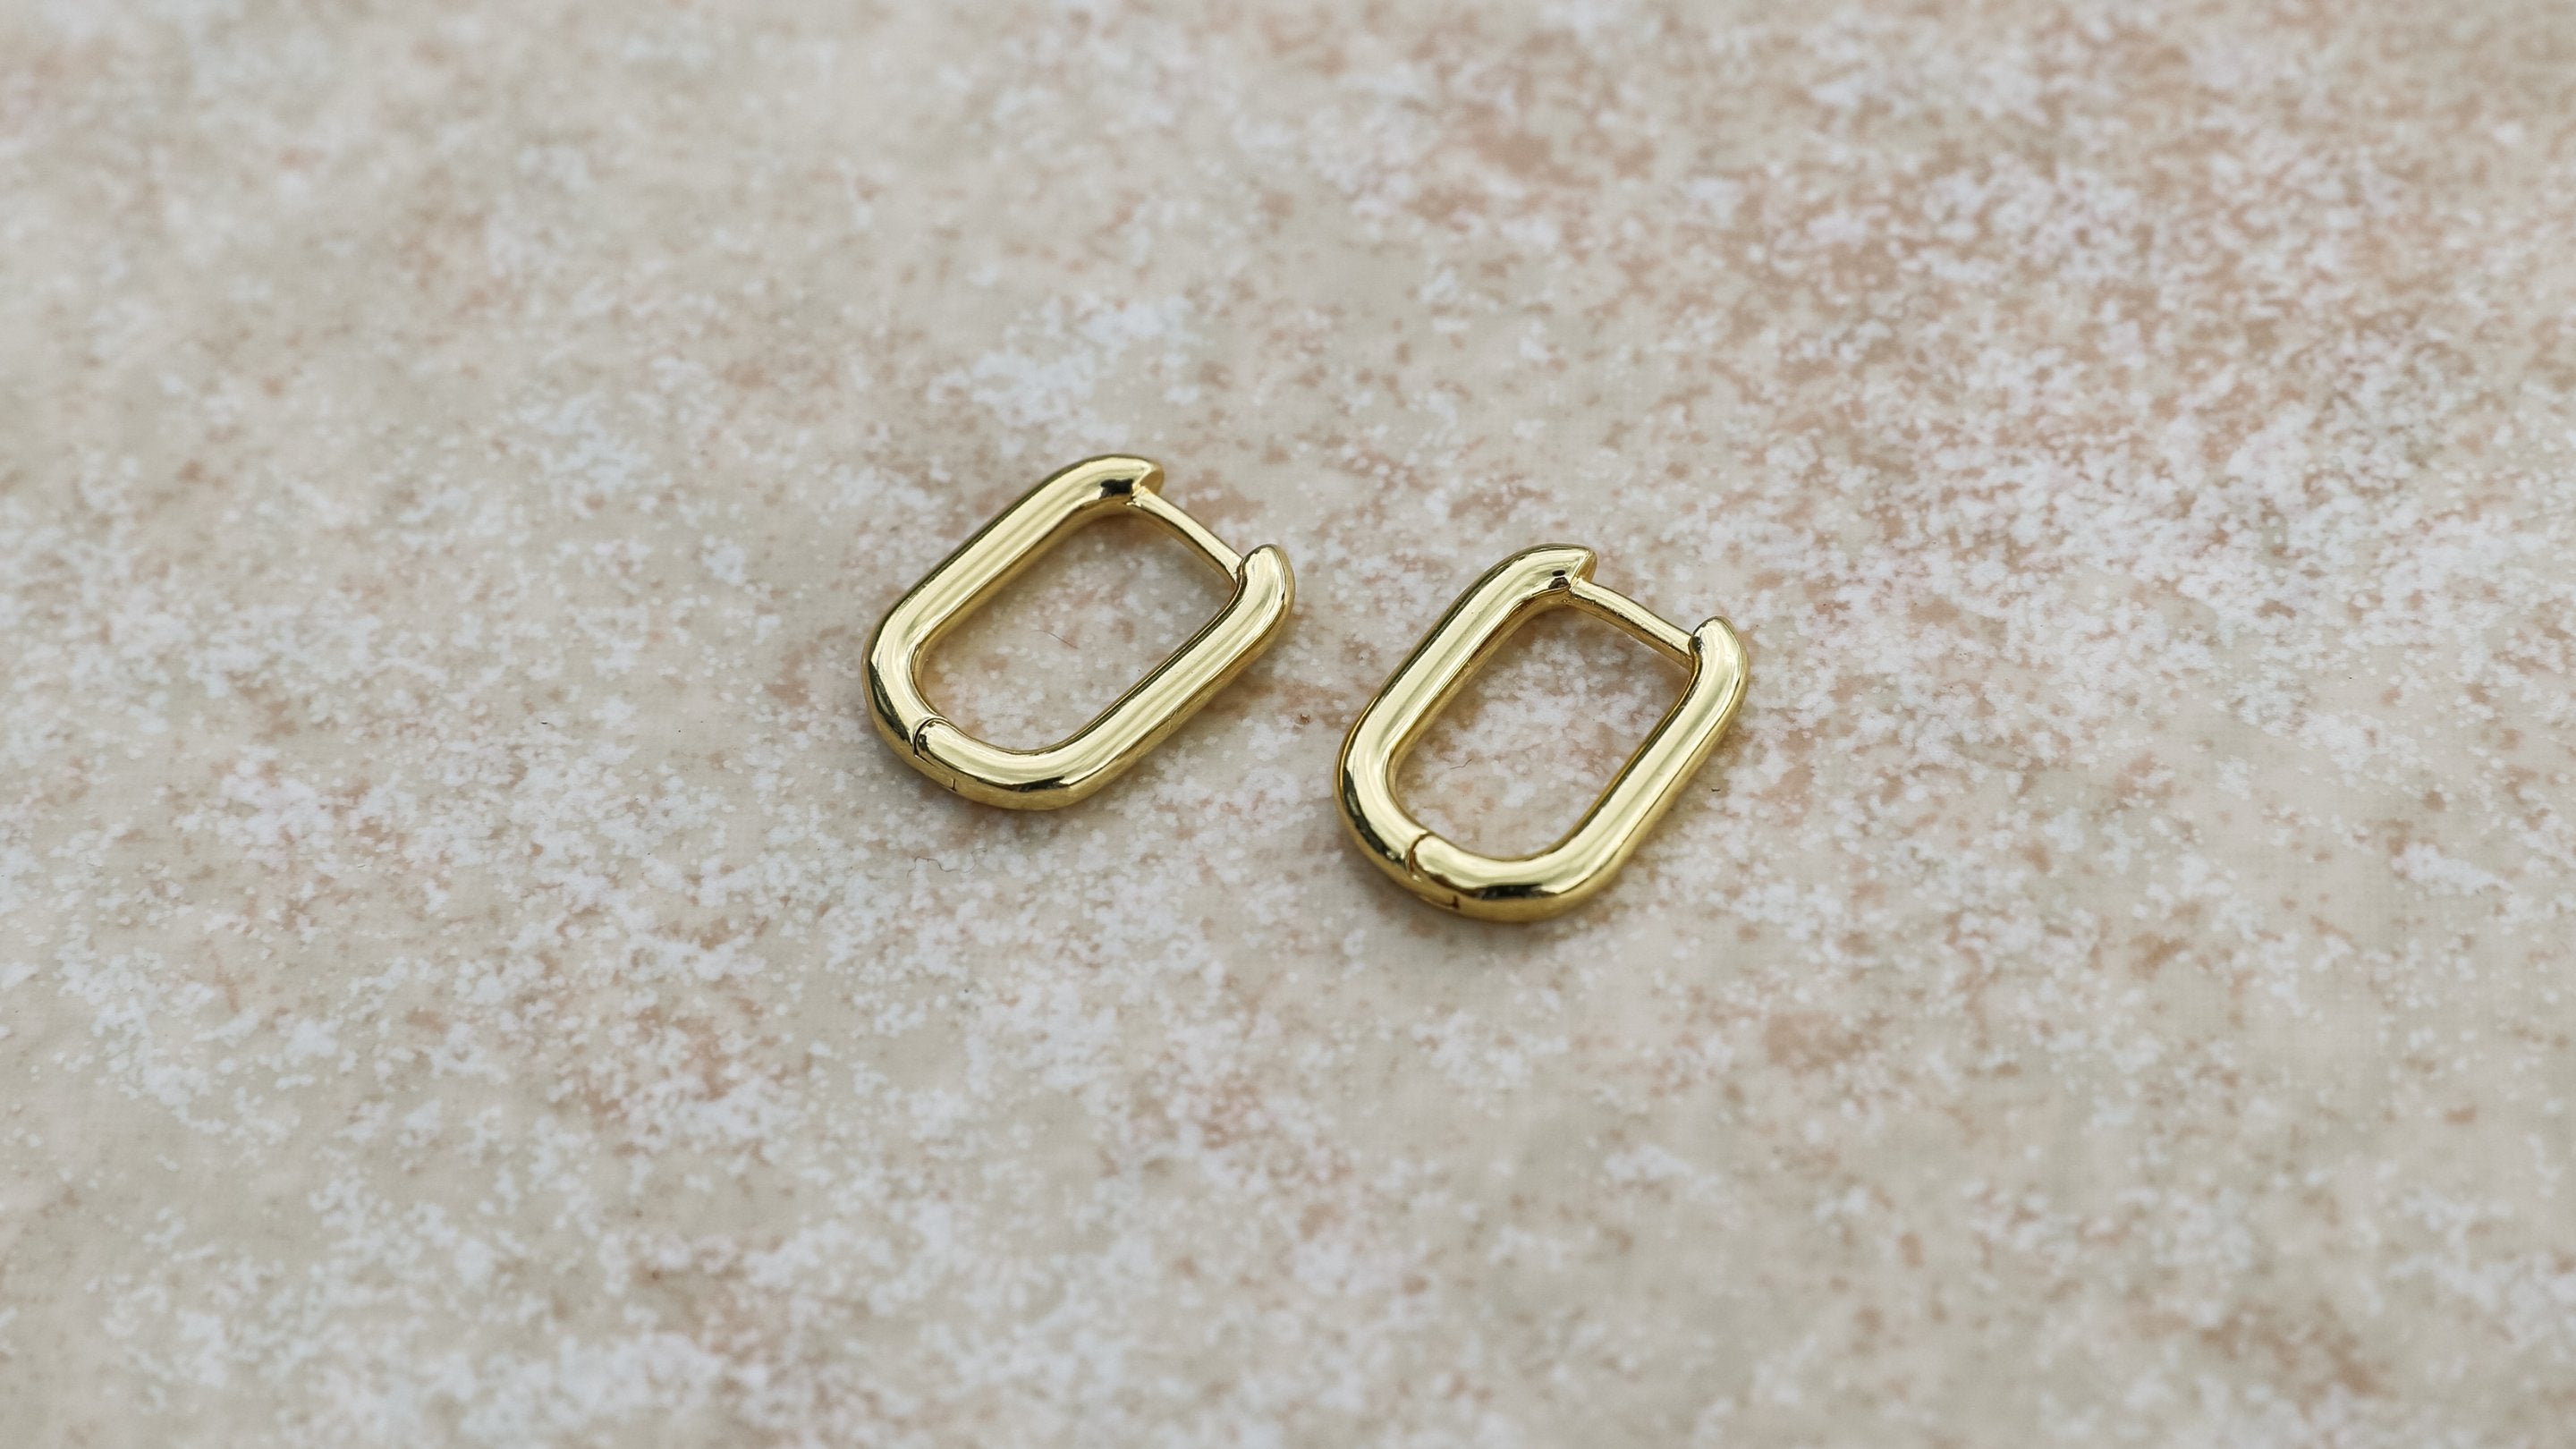 gold hoop earrings on stone